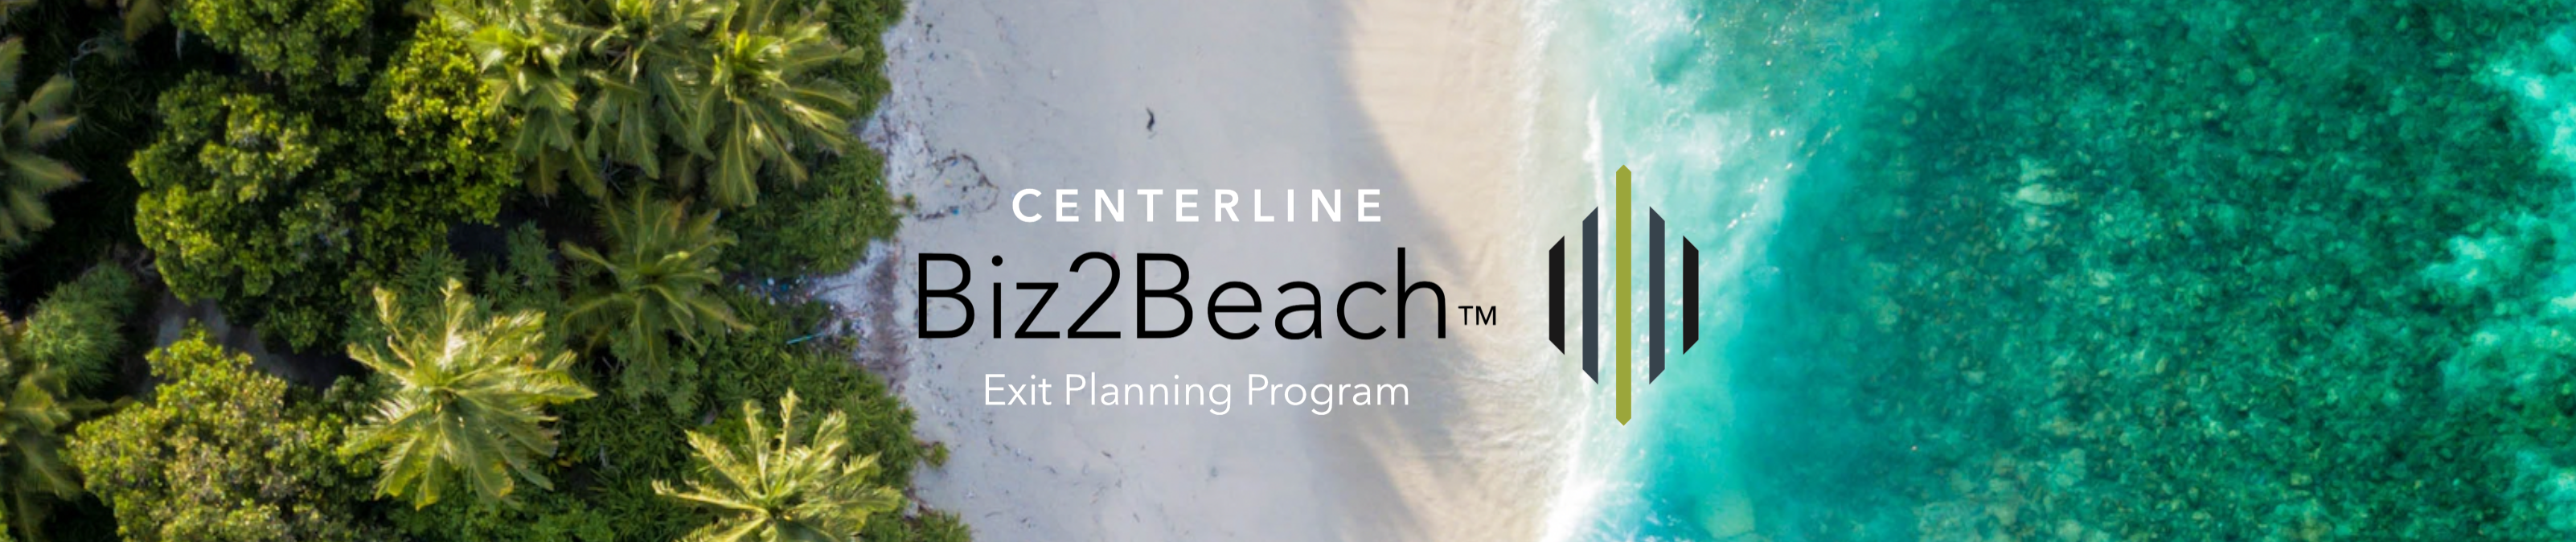 Biz2Beach Exit Planning Program